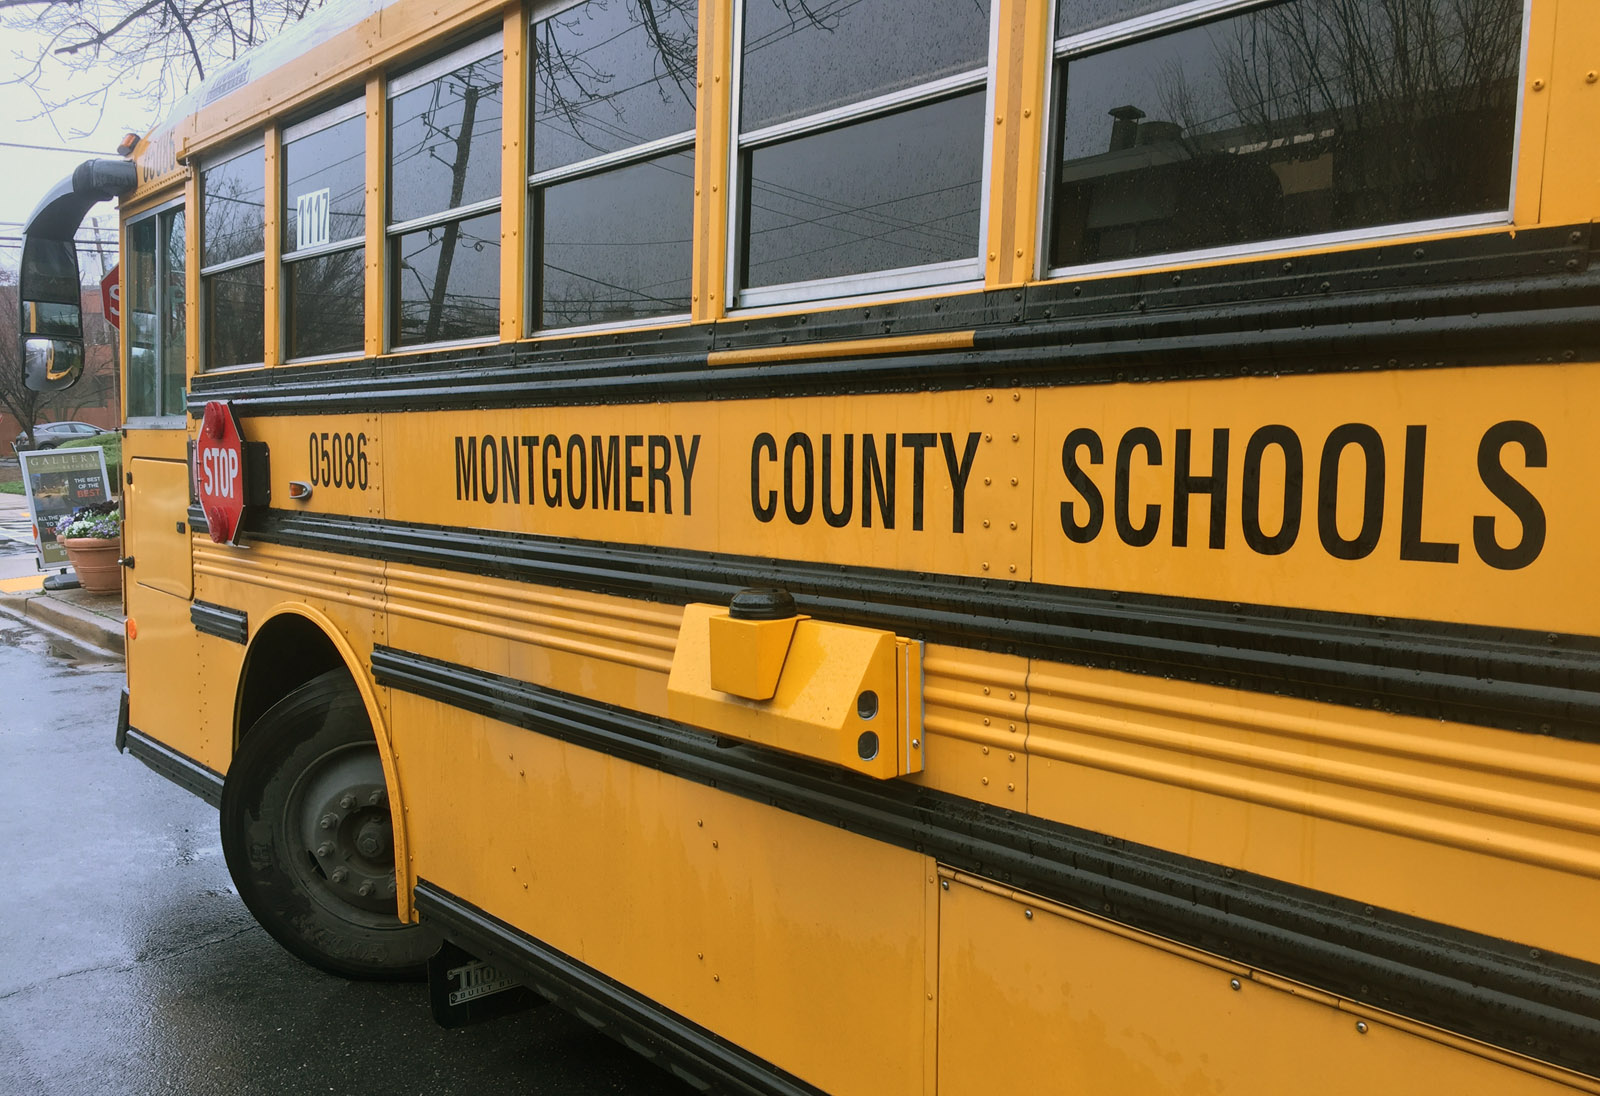 Montgomery Co. schools could get shorter spring break under new plan